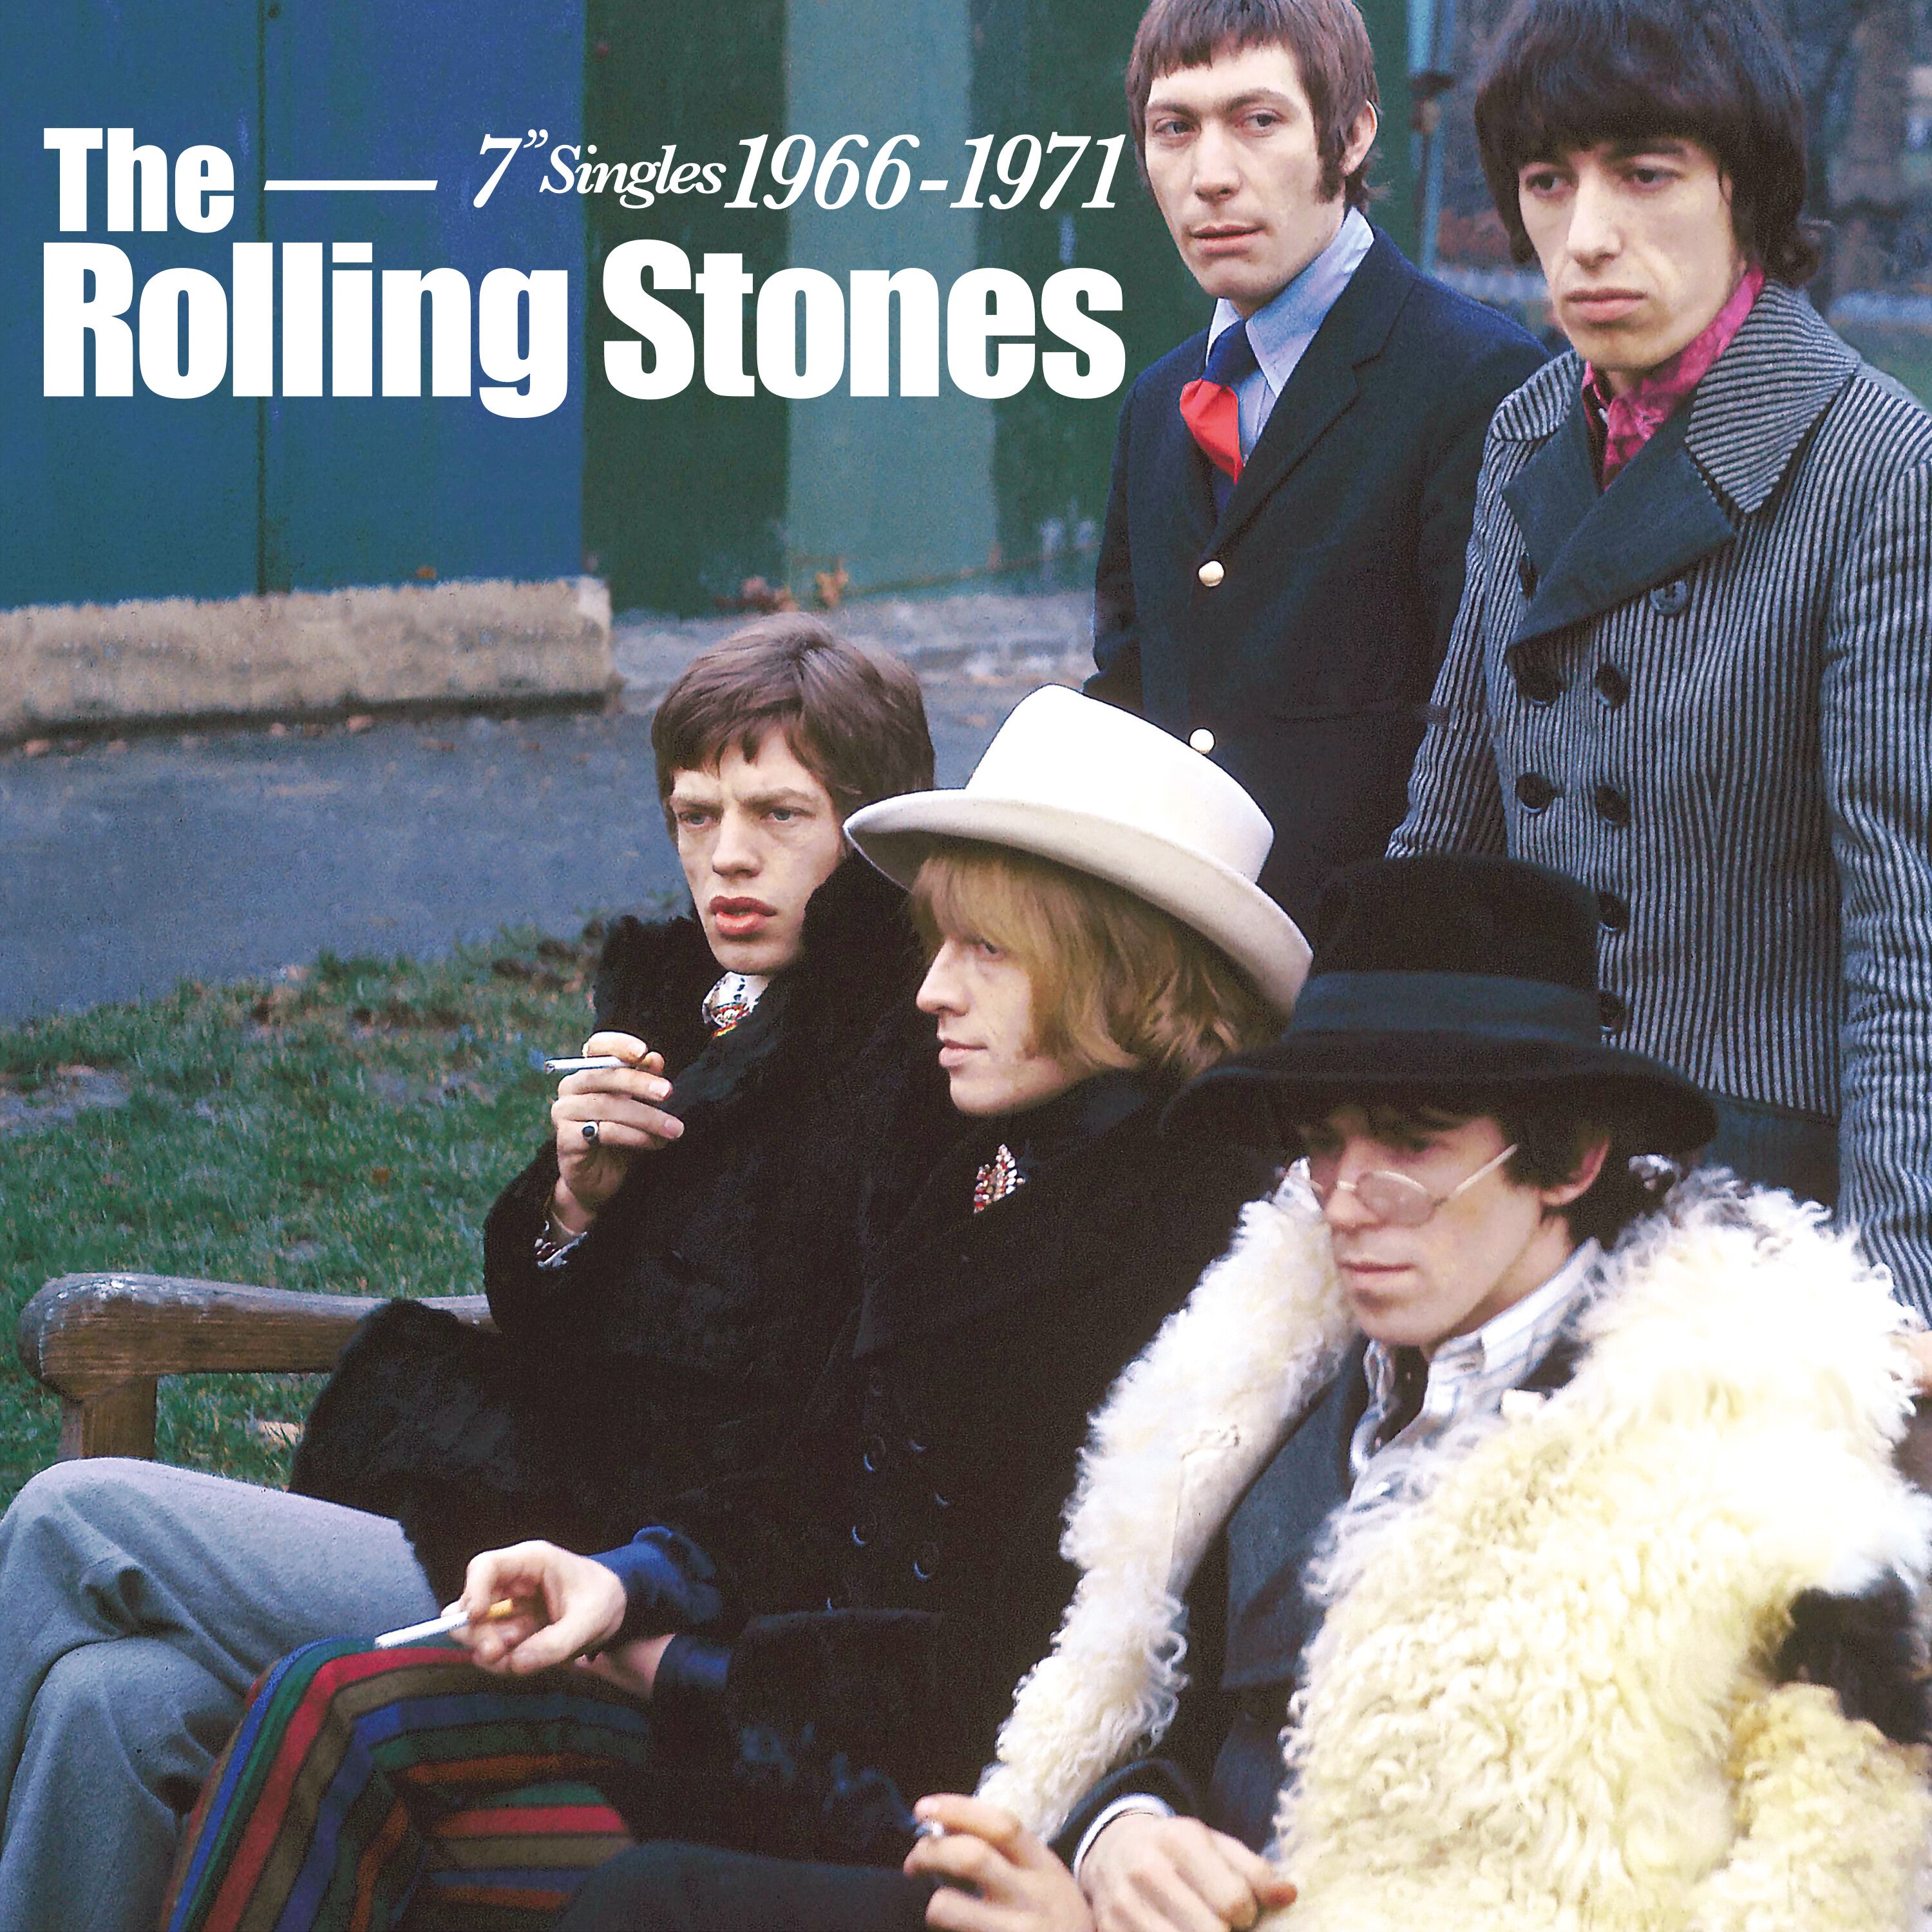 https://images.bravado.de/prod/product-assets/product-asset-data/rolling-stones-the/the-rolling-stones/products/506175/web/420321/image-thumb__420321__3000x3000_original/The-Rolling-Stones-7-Singles-Box-Volume-Two-1966-1971-Vinyl-Box-Single-506175-420321.bdad6e10.jpg